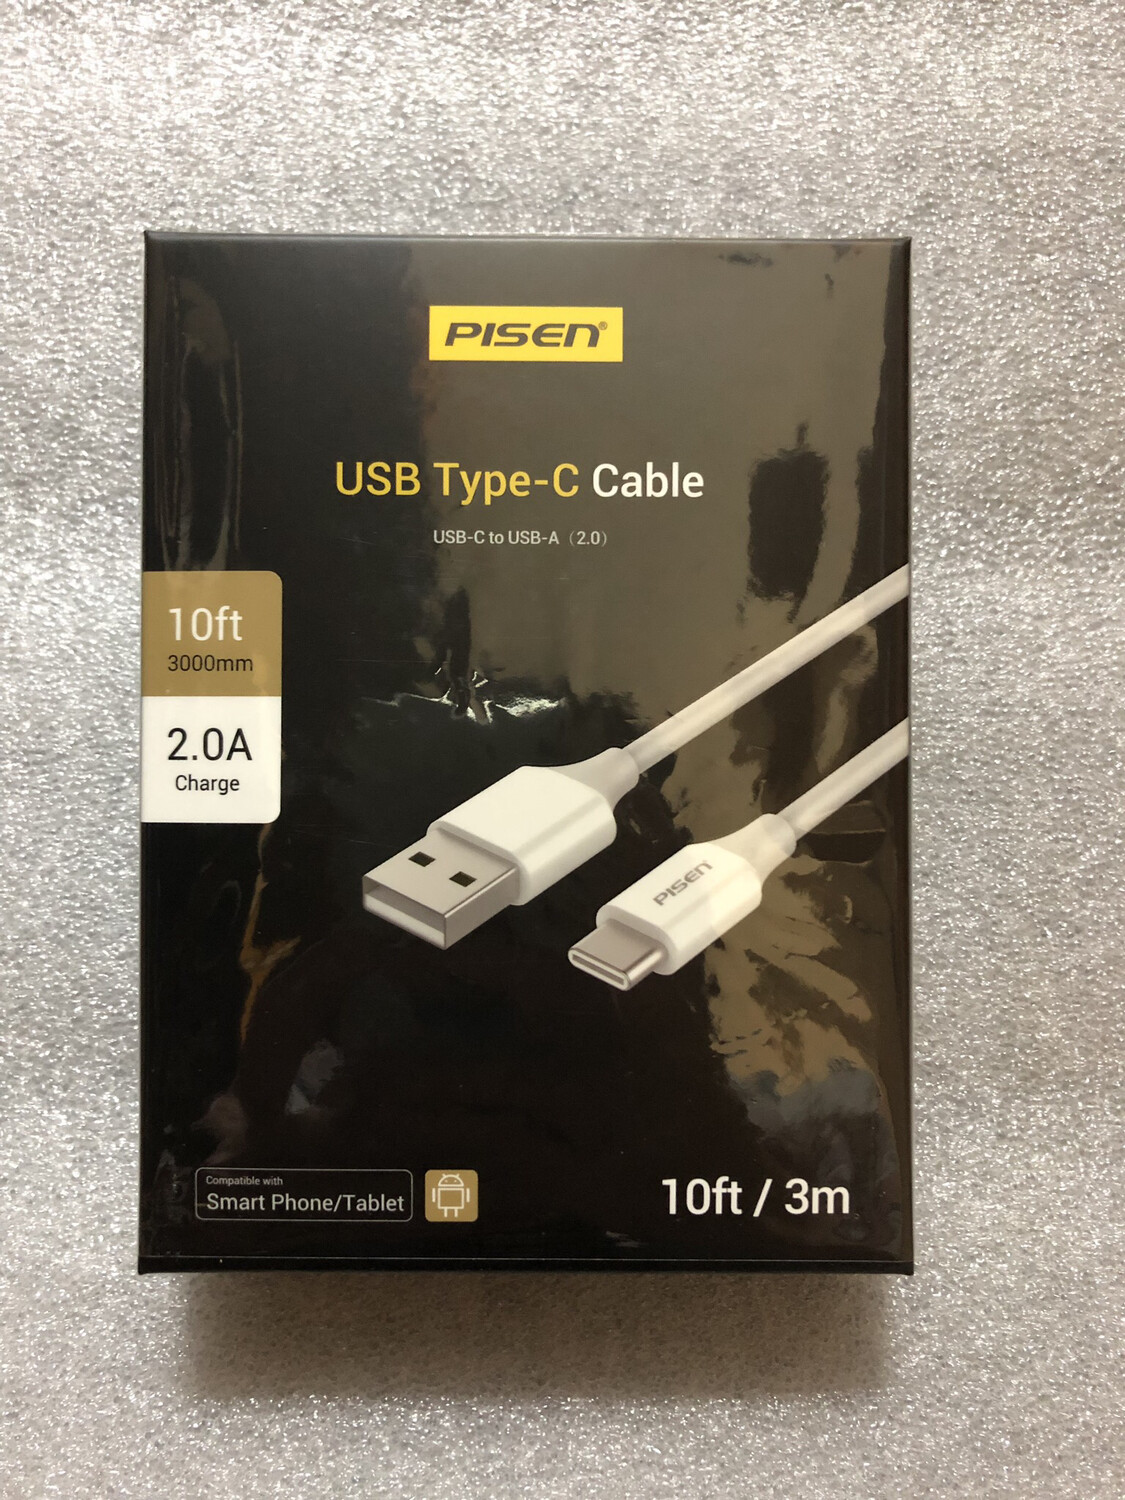 Pisen USB Type -C Cable 3000mm